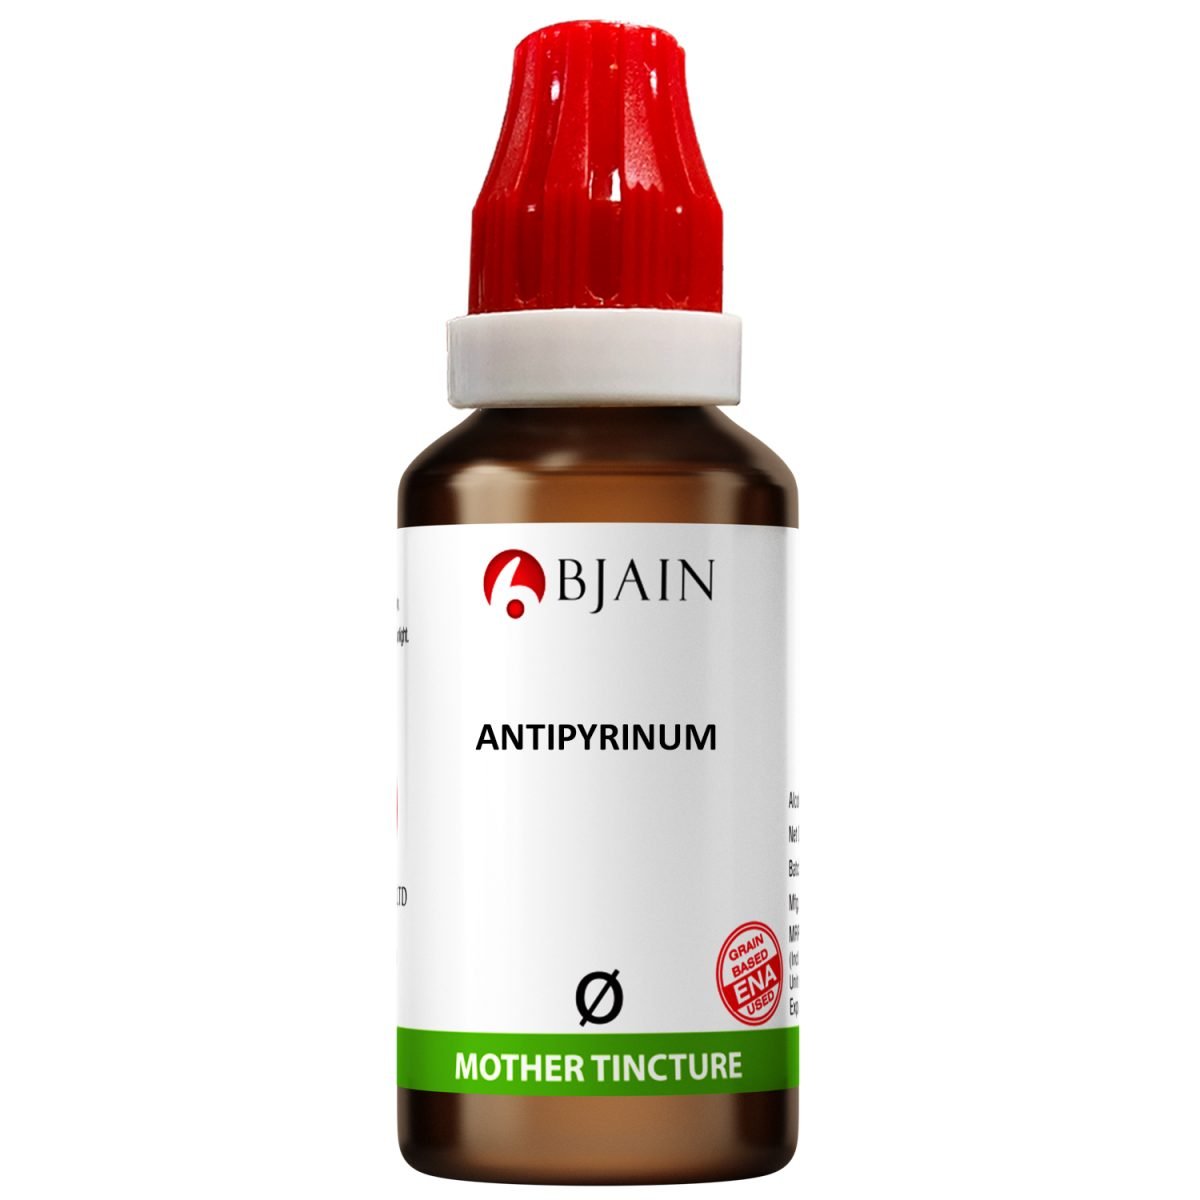 BJain Antipyrinum Q Mother Tincture